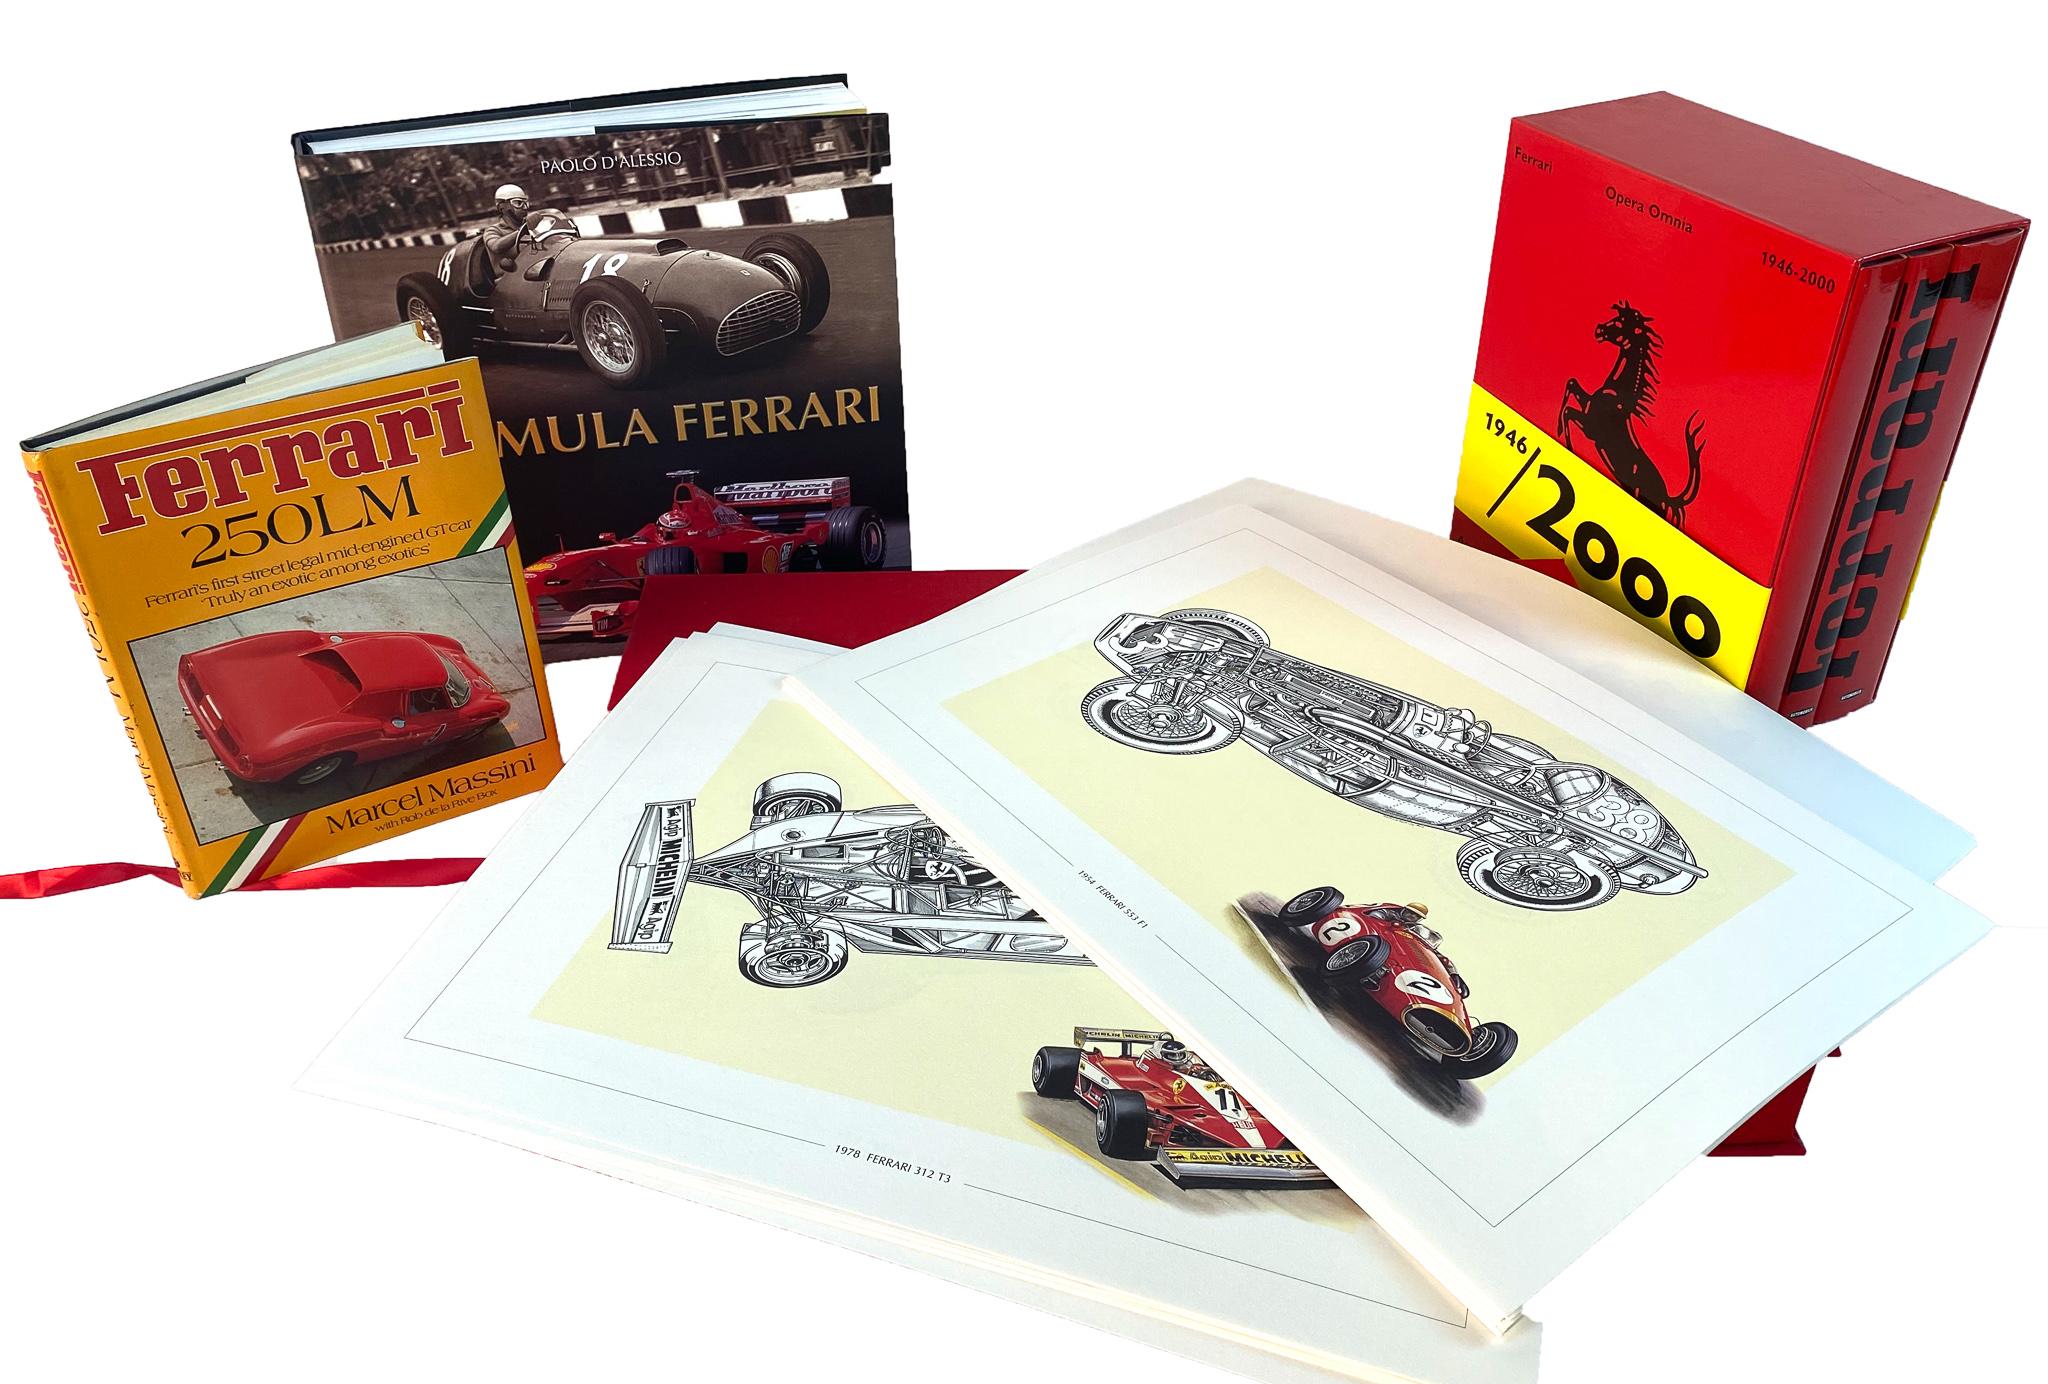 Formula Ferrari 1946-2000 Volumes, Massini Ferrari 250LM and Formula Ferrari 1949-2000 Boxed Set